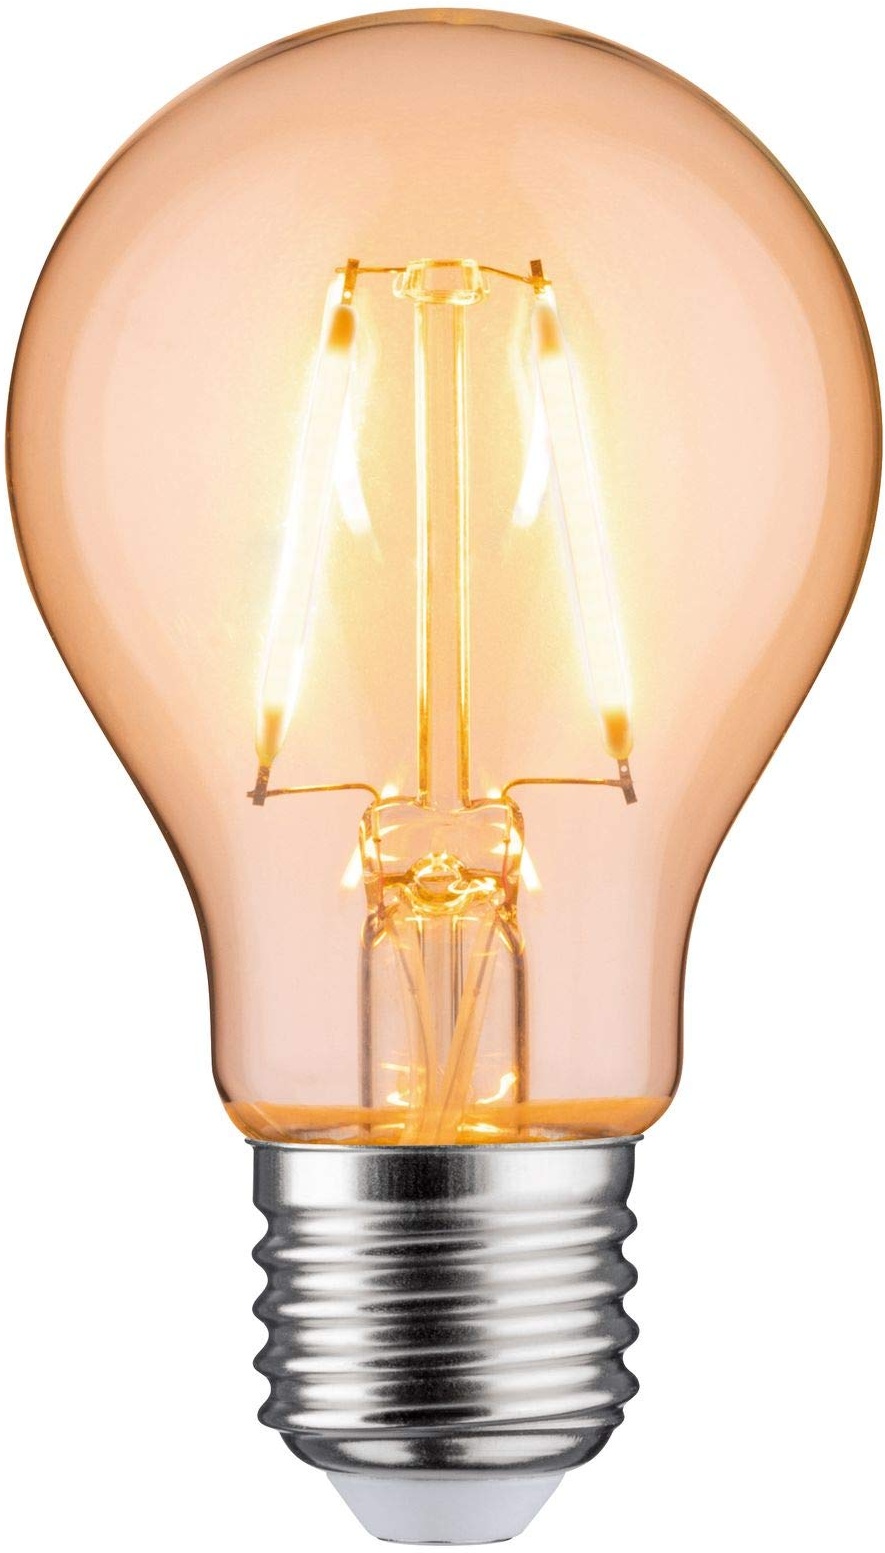 Paulmann 28722 LED Lampe Standardform 1,1W Leuchtmittel Orange Beleuchtung Glas Licht 2000K E27, Klar